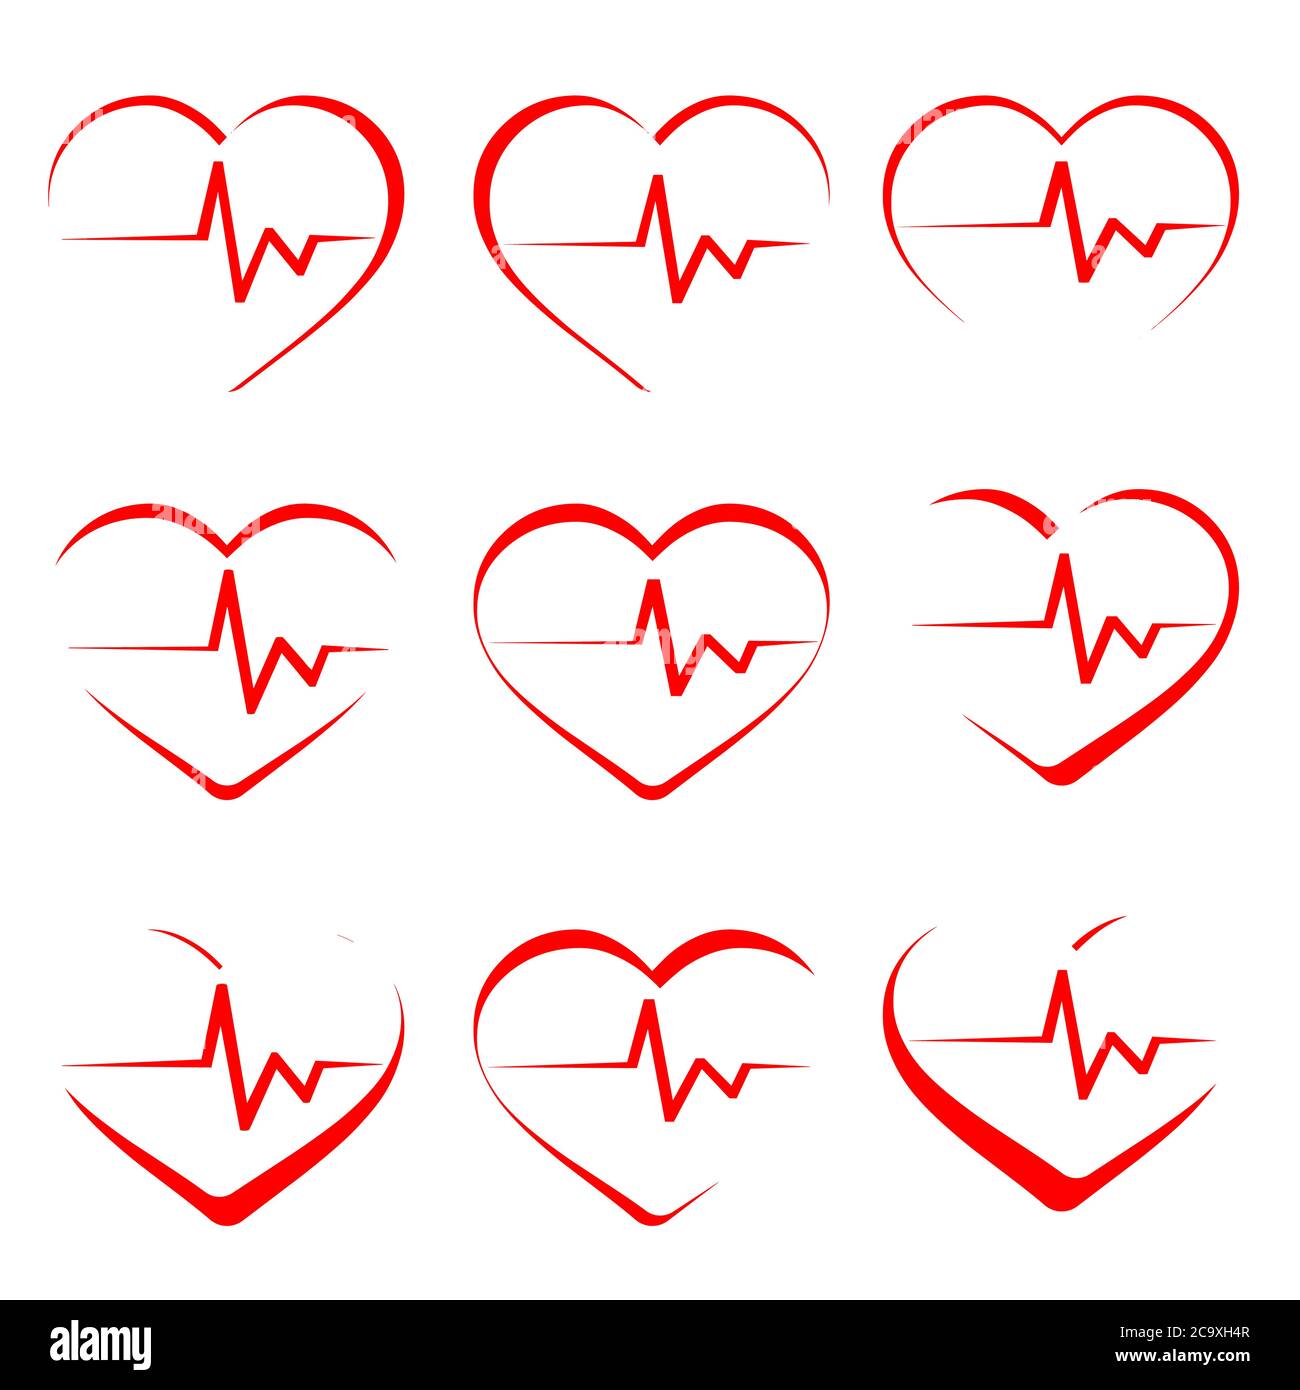 Cardiology clip art illustration vector logo design medical and health care symbols. Stock Vector